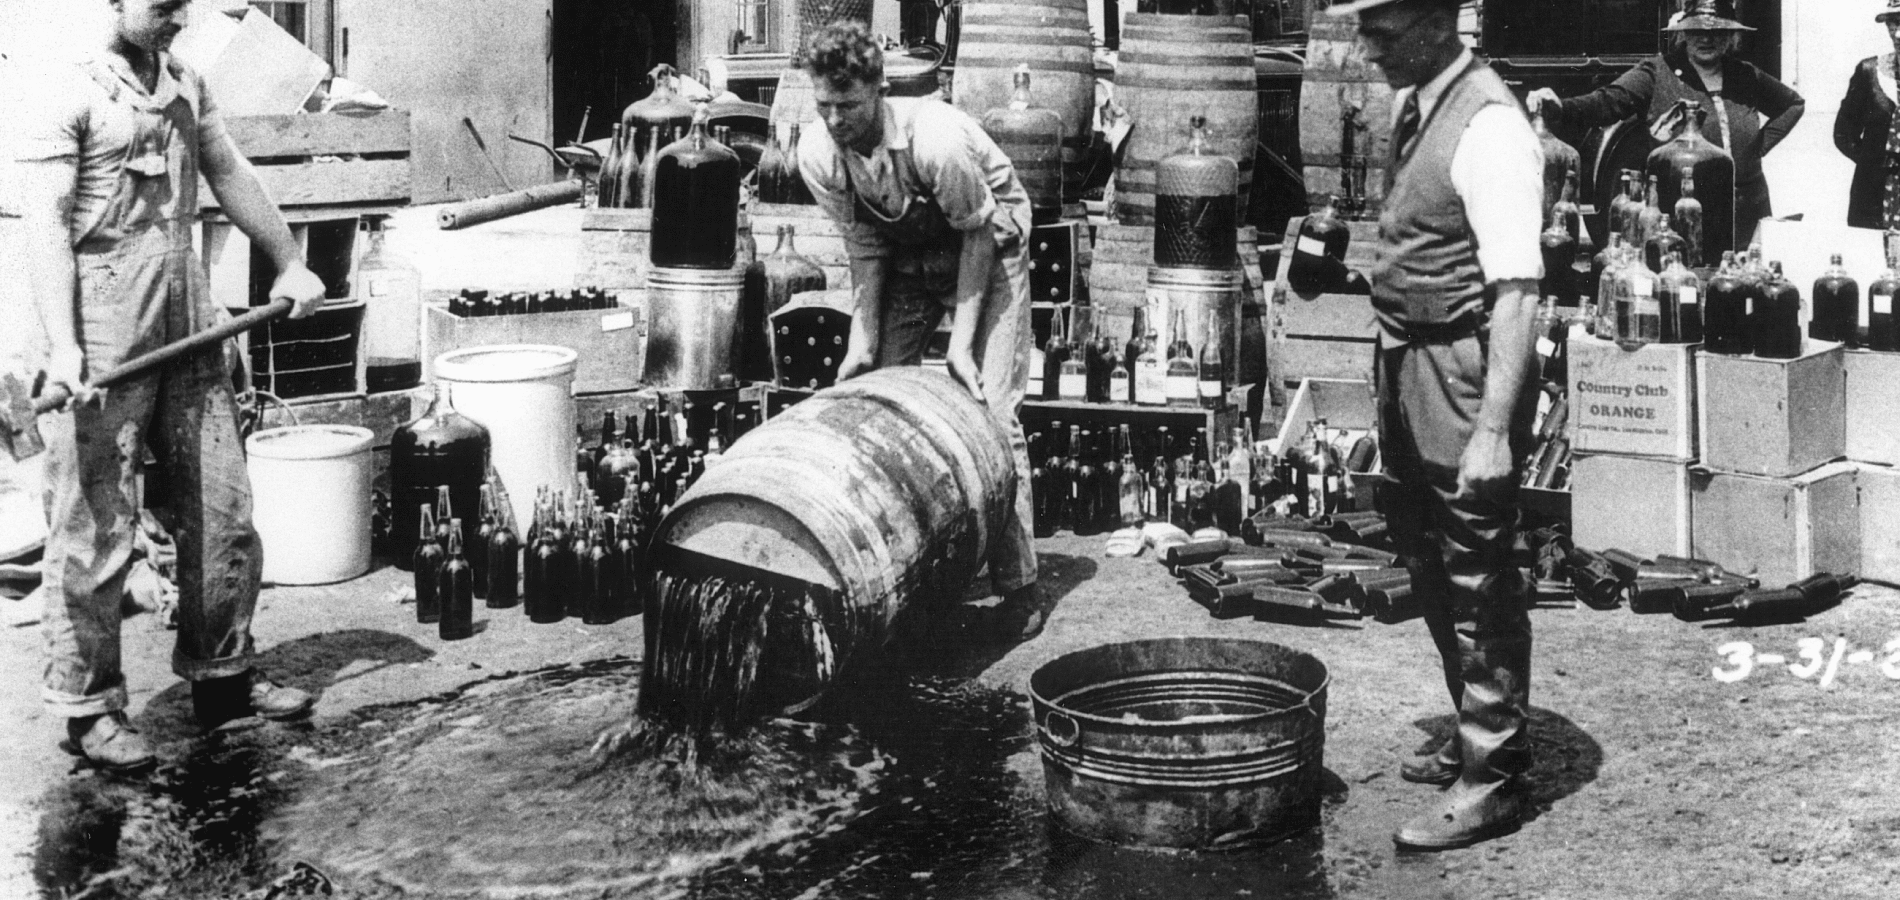 Prohibition era, dumping alcohol